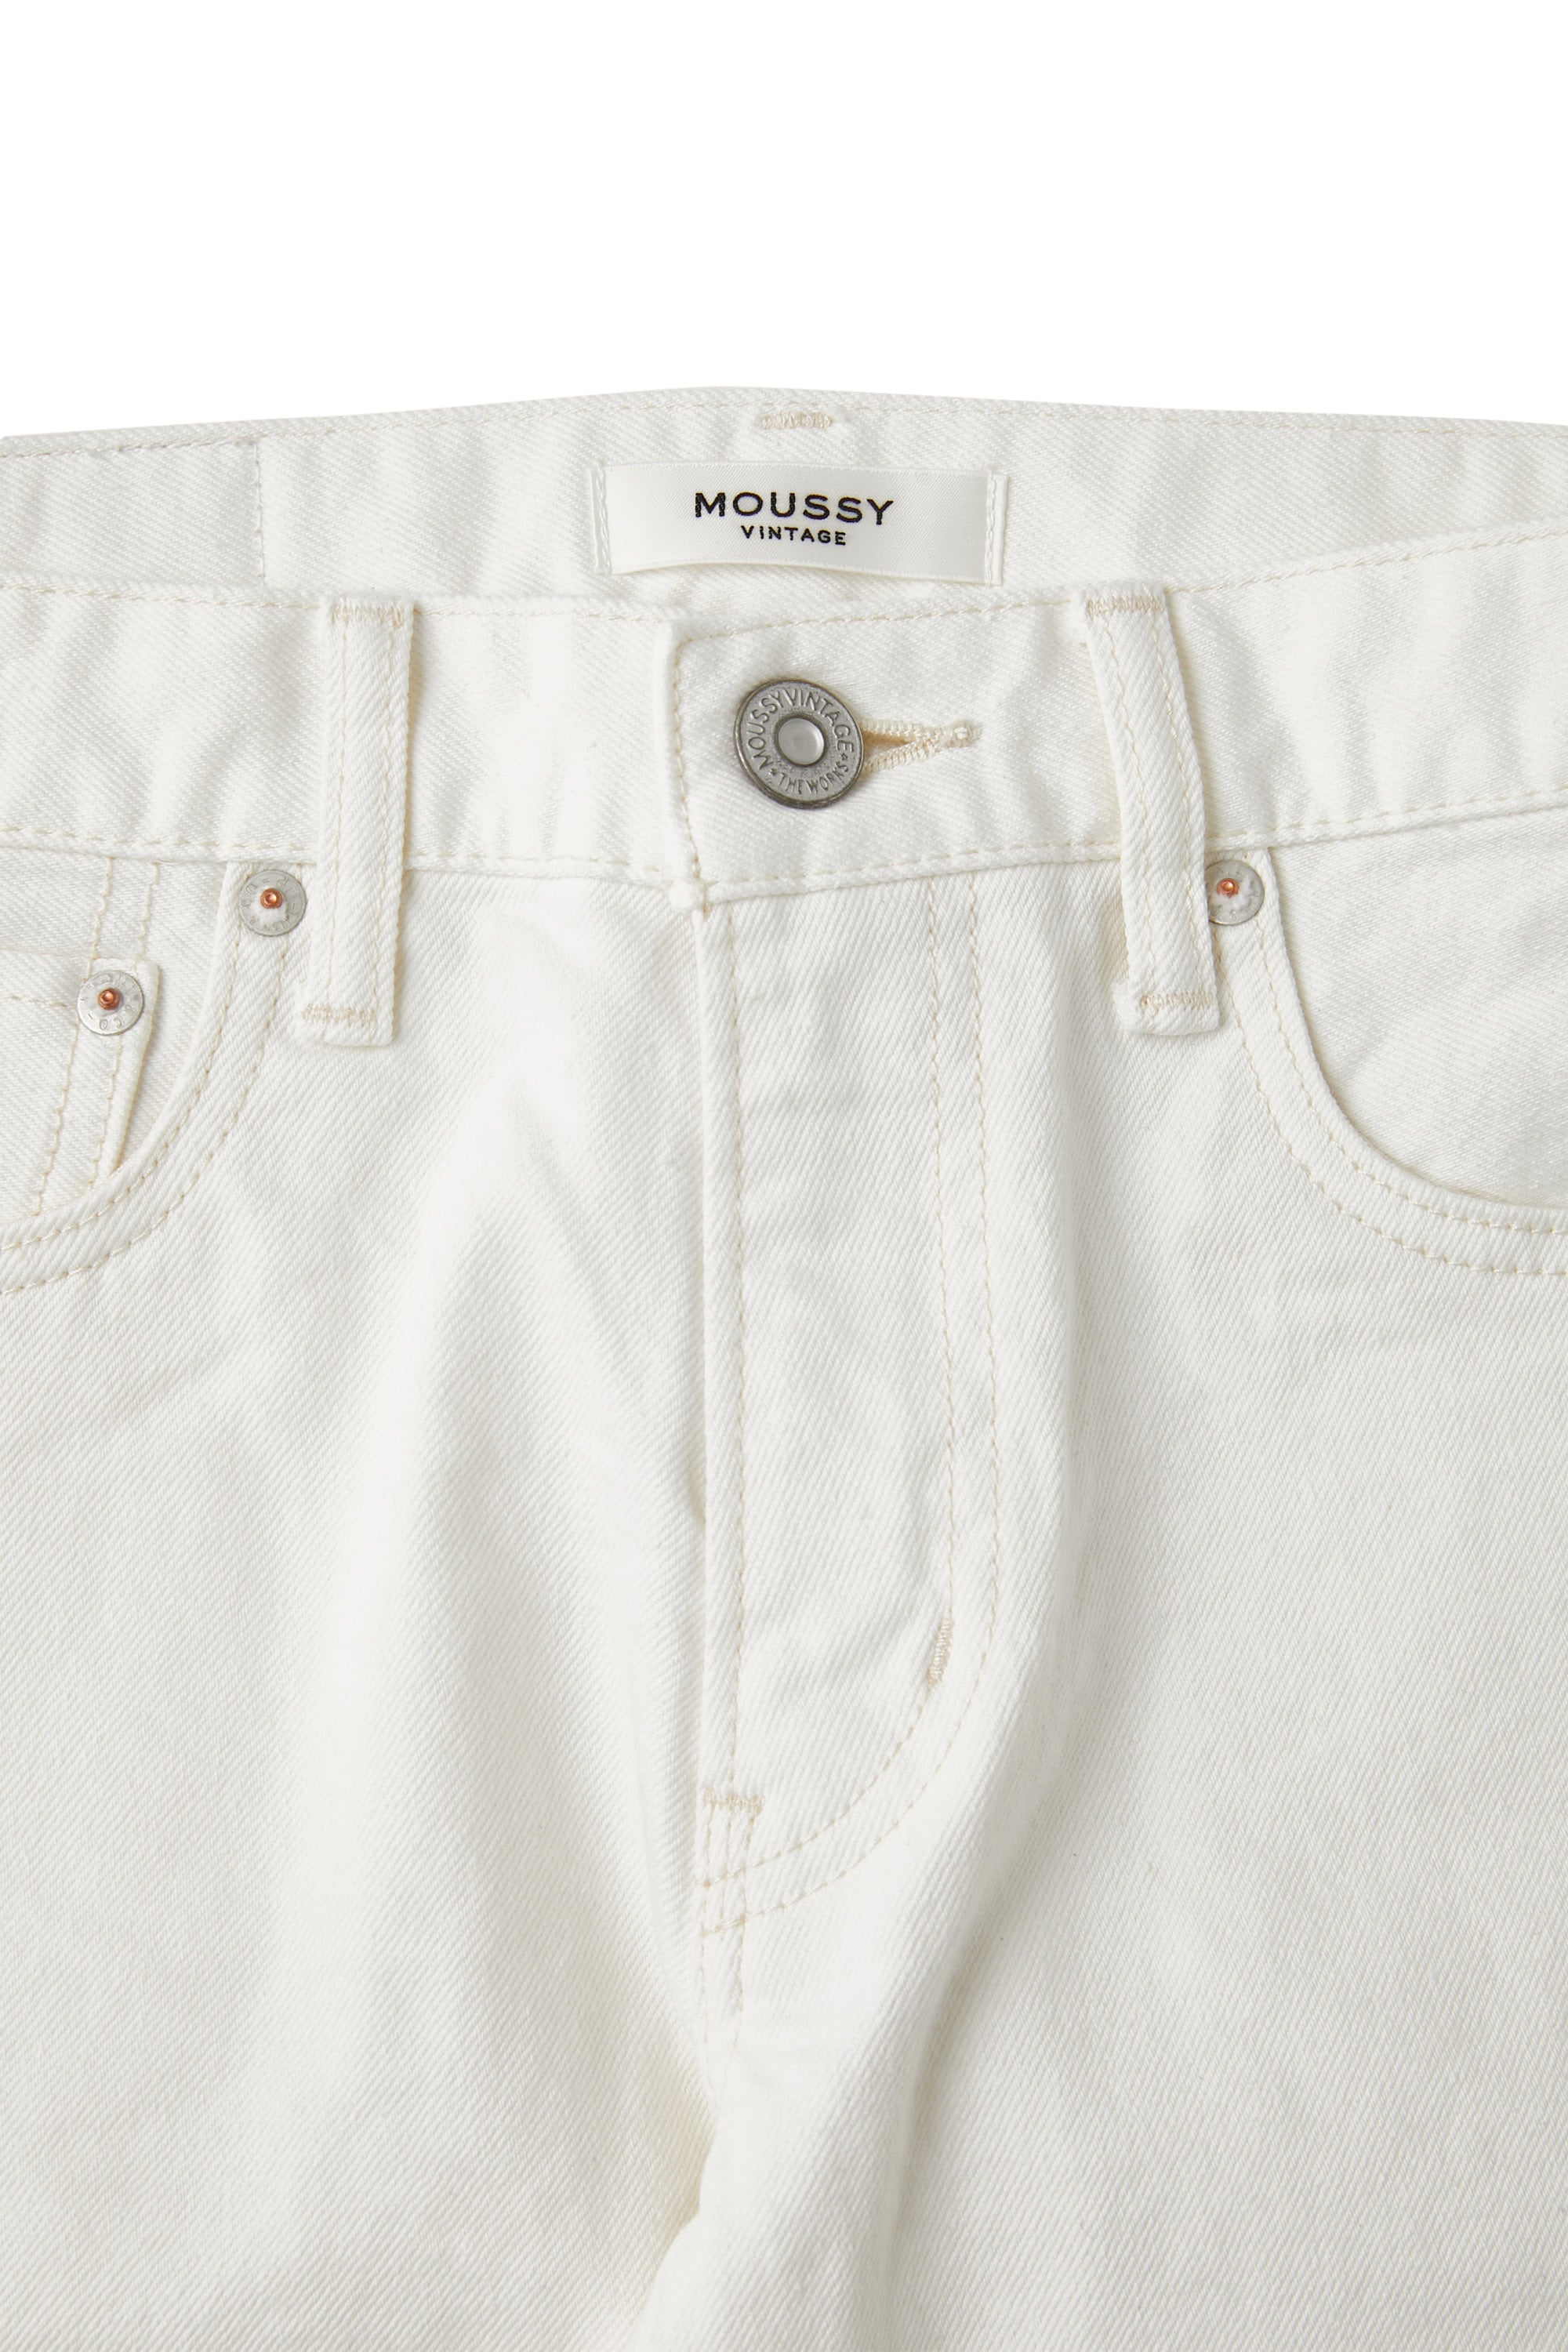 Moussy Denim Buffalo Skinny Jeans in White